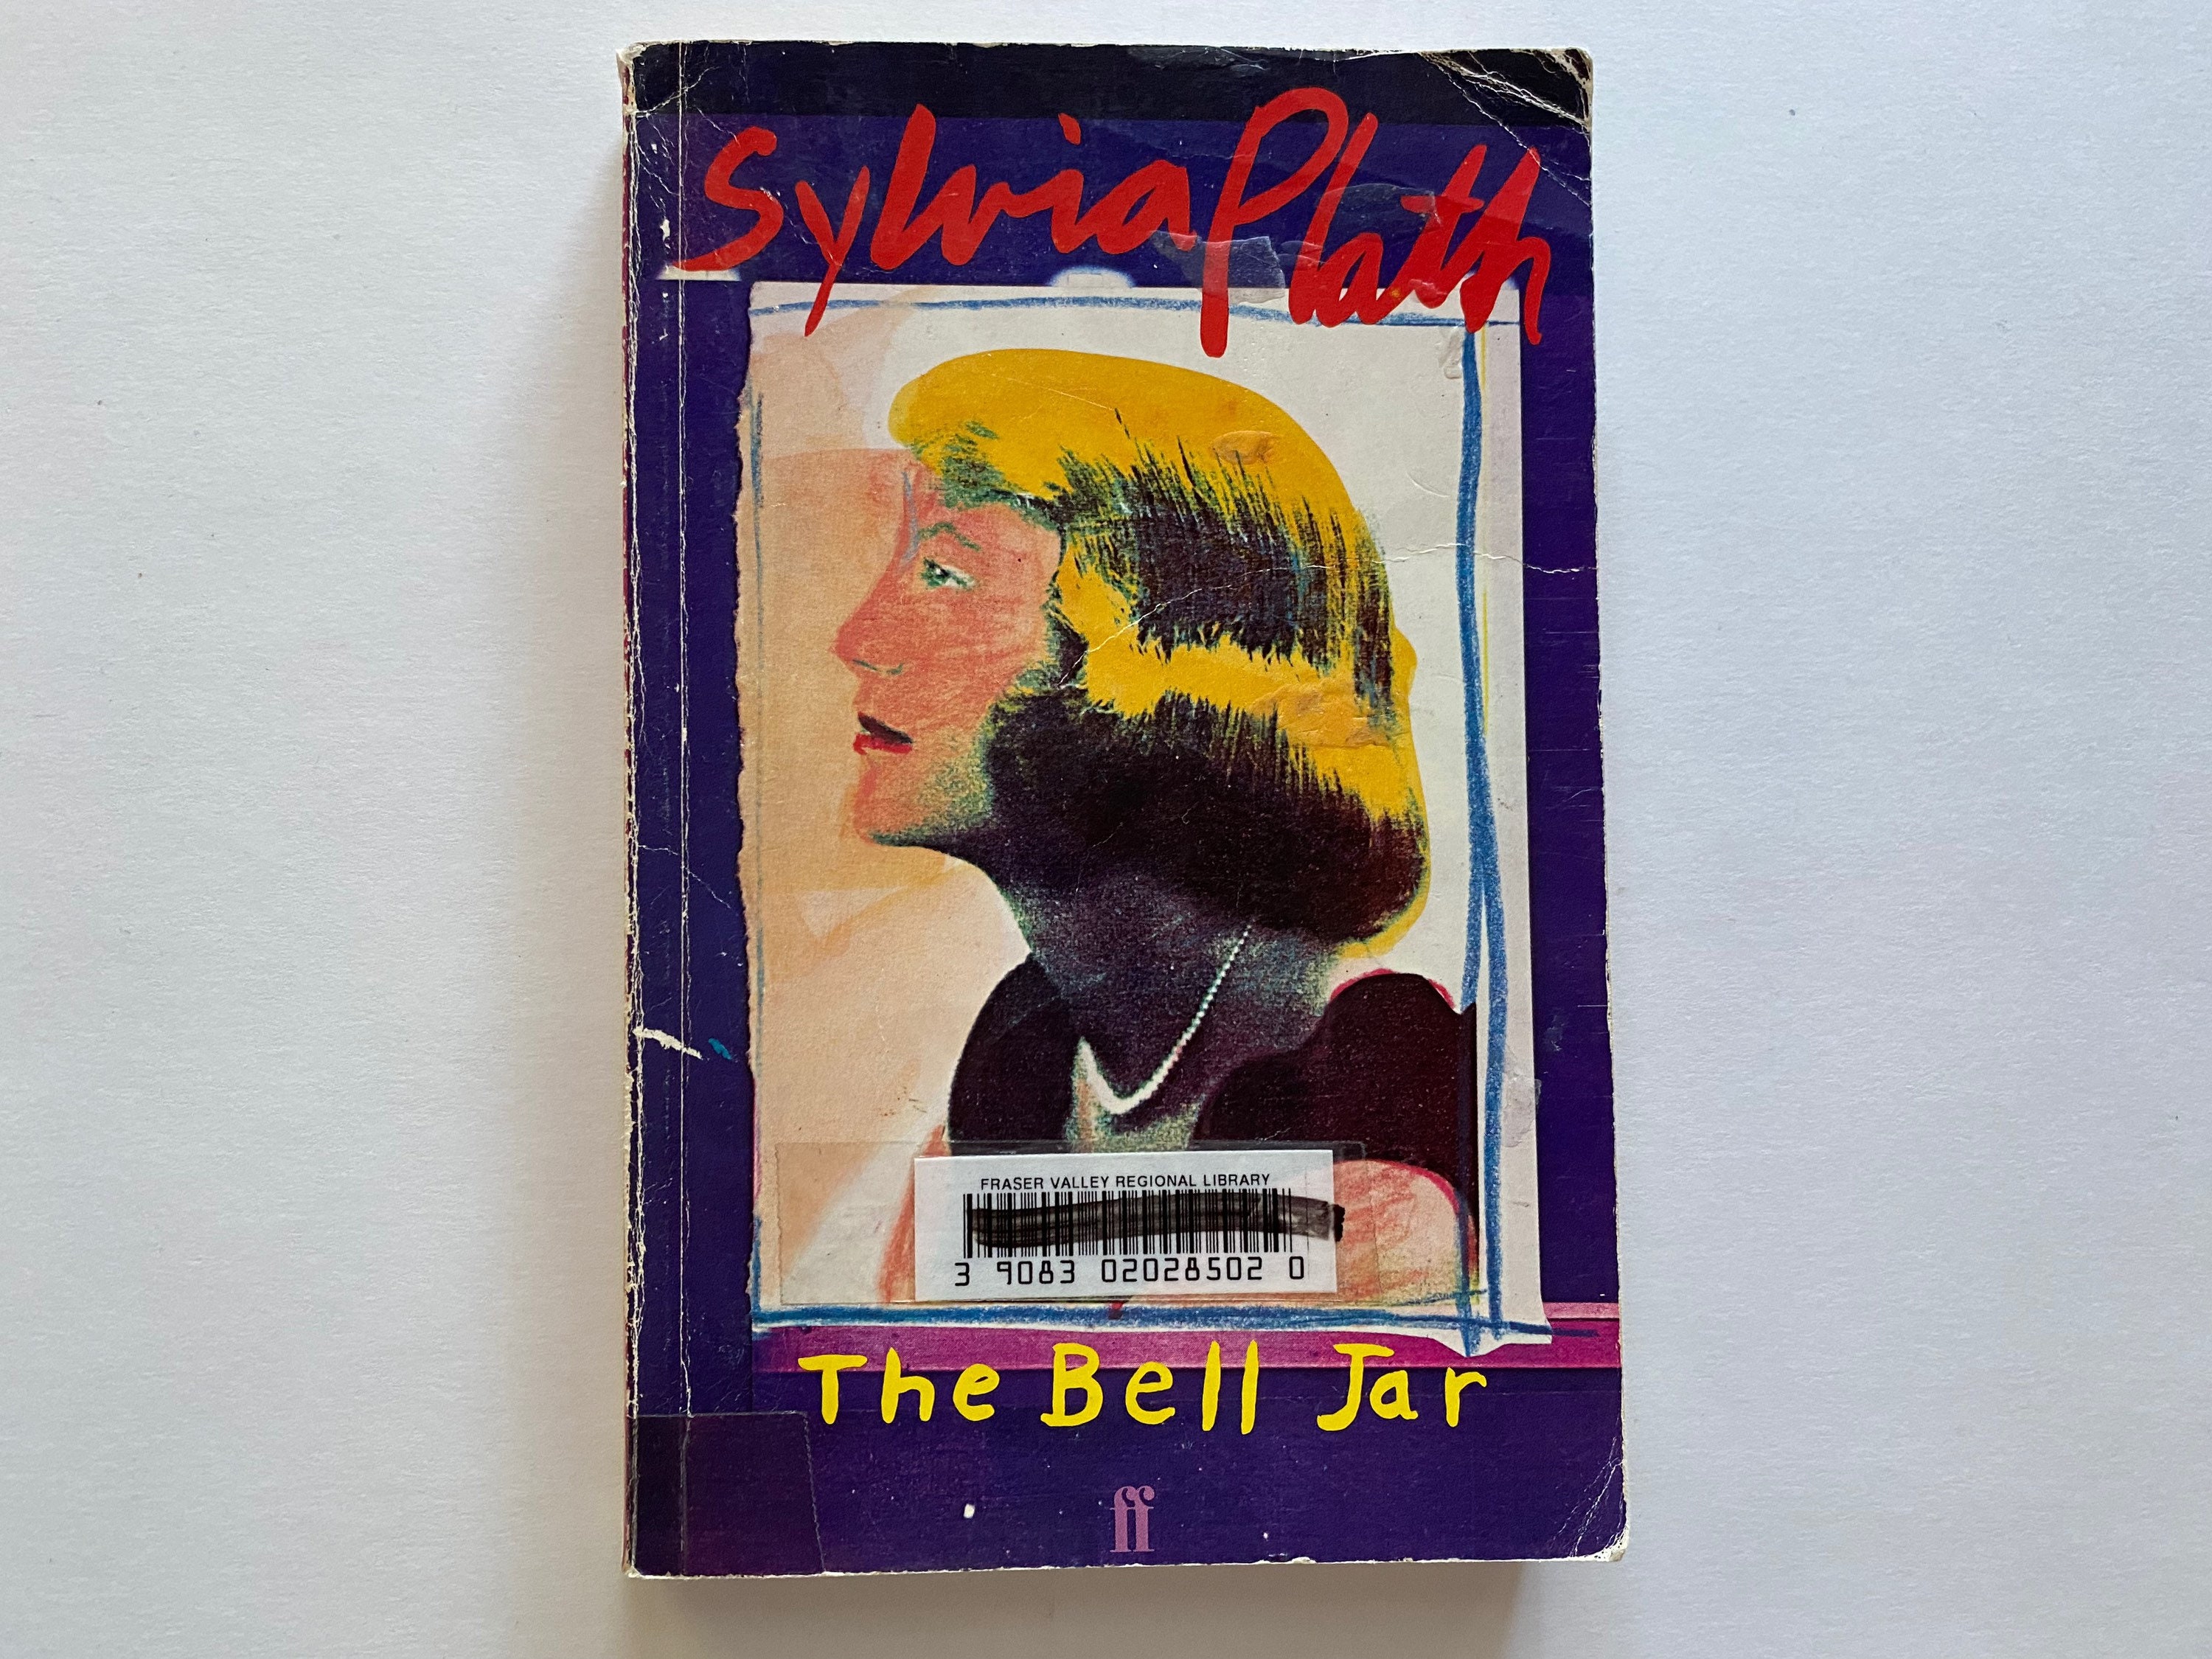 The Bell Jar - Plath, Sylvia: 9780571226160 - AbeBooks